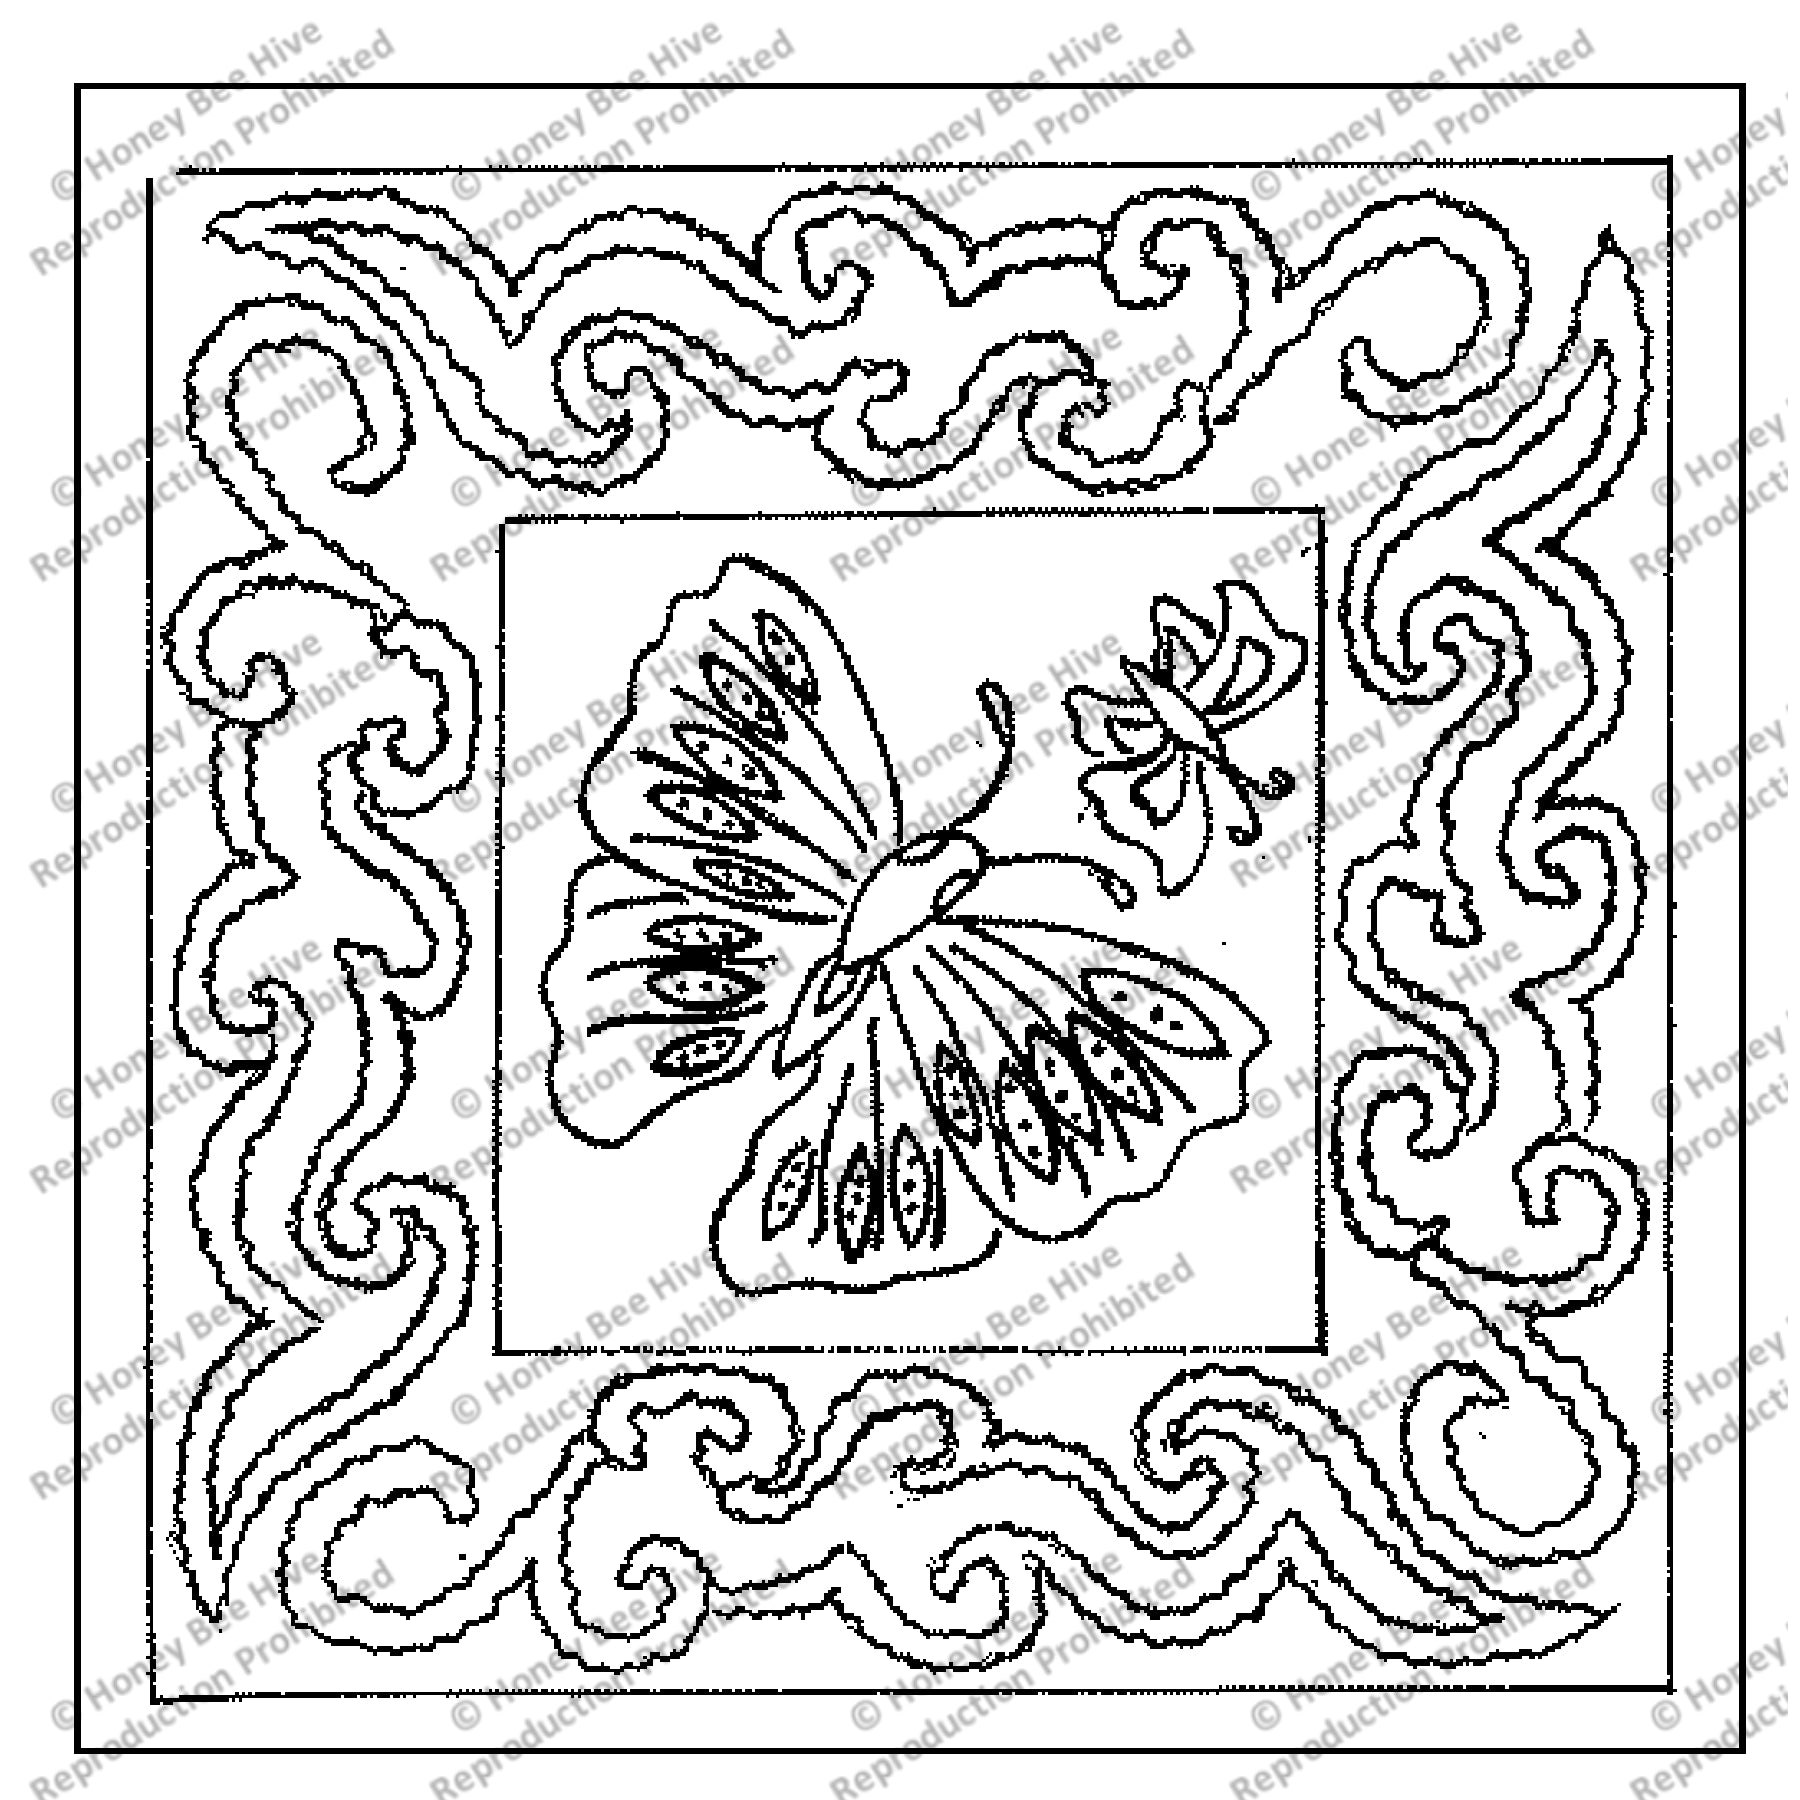 Chinese Butterflies, rug hooking pattern